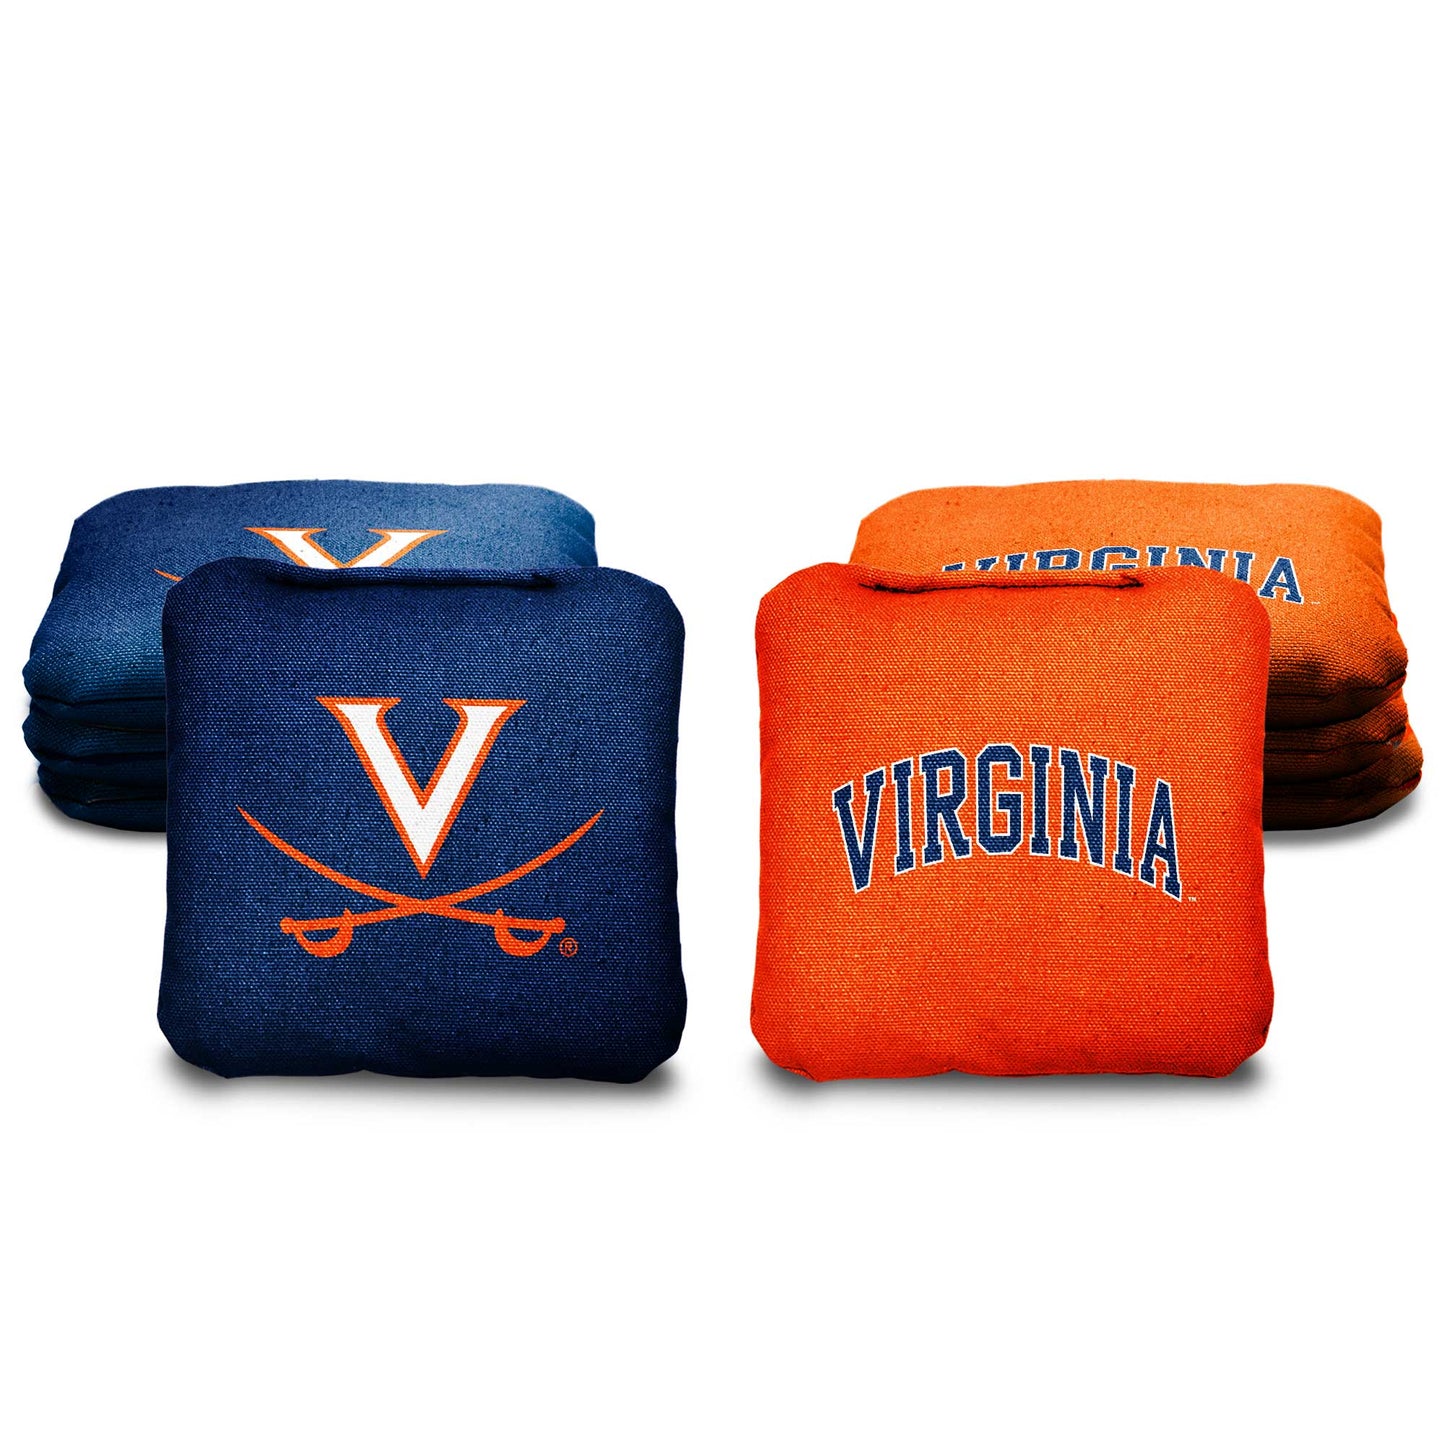 University of Virginia Cornhole Bags - 8 Cornhole Bags